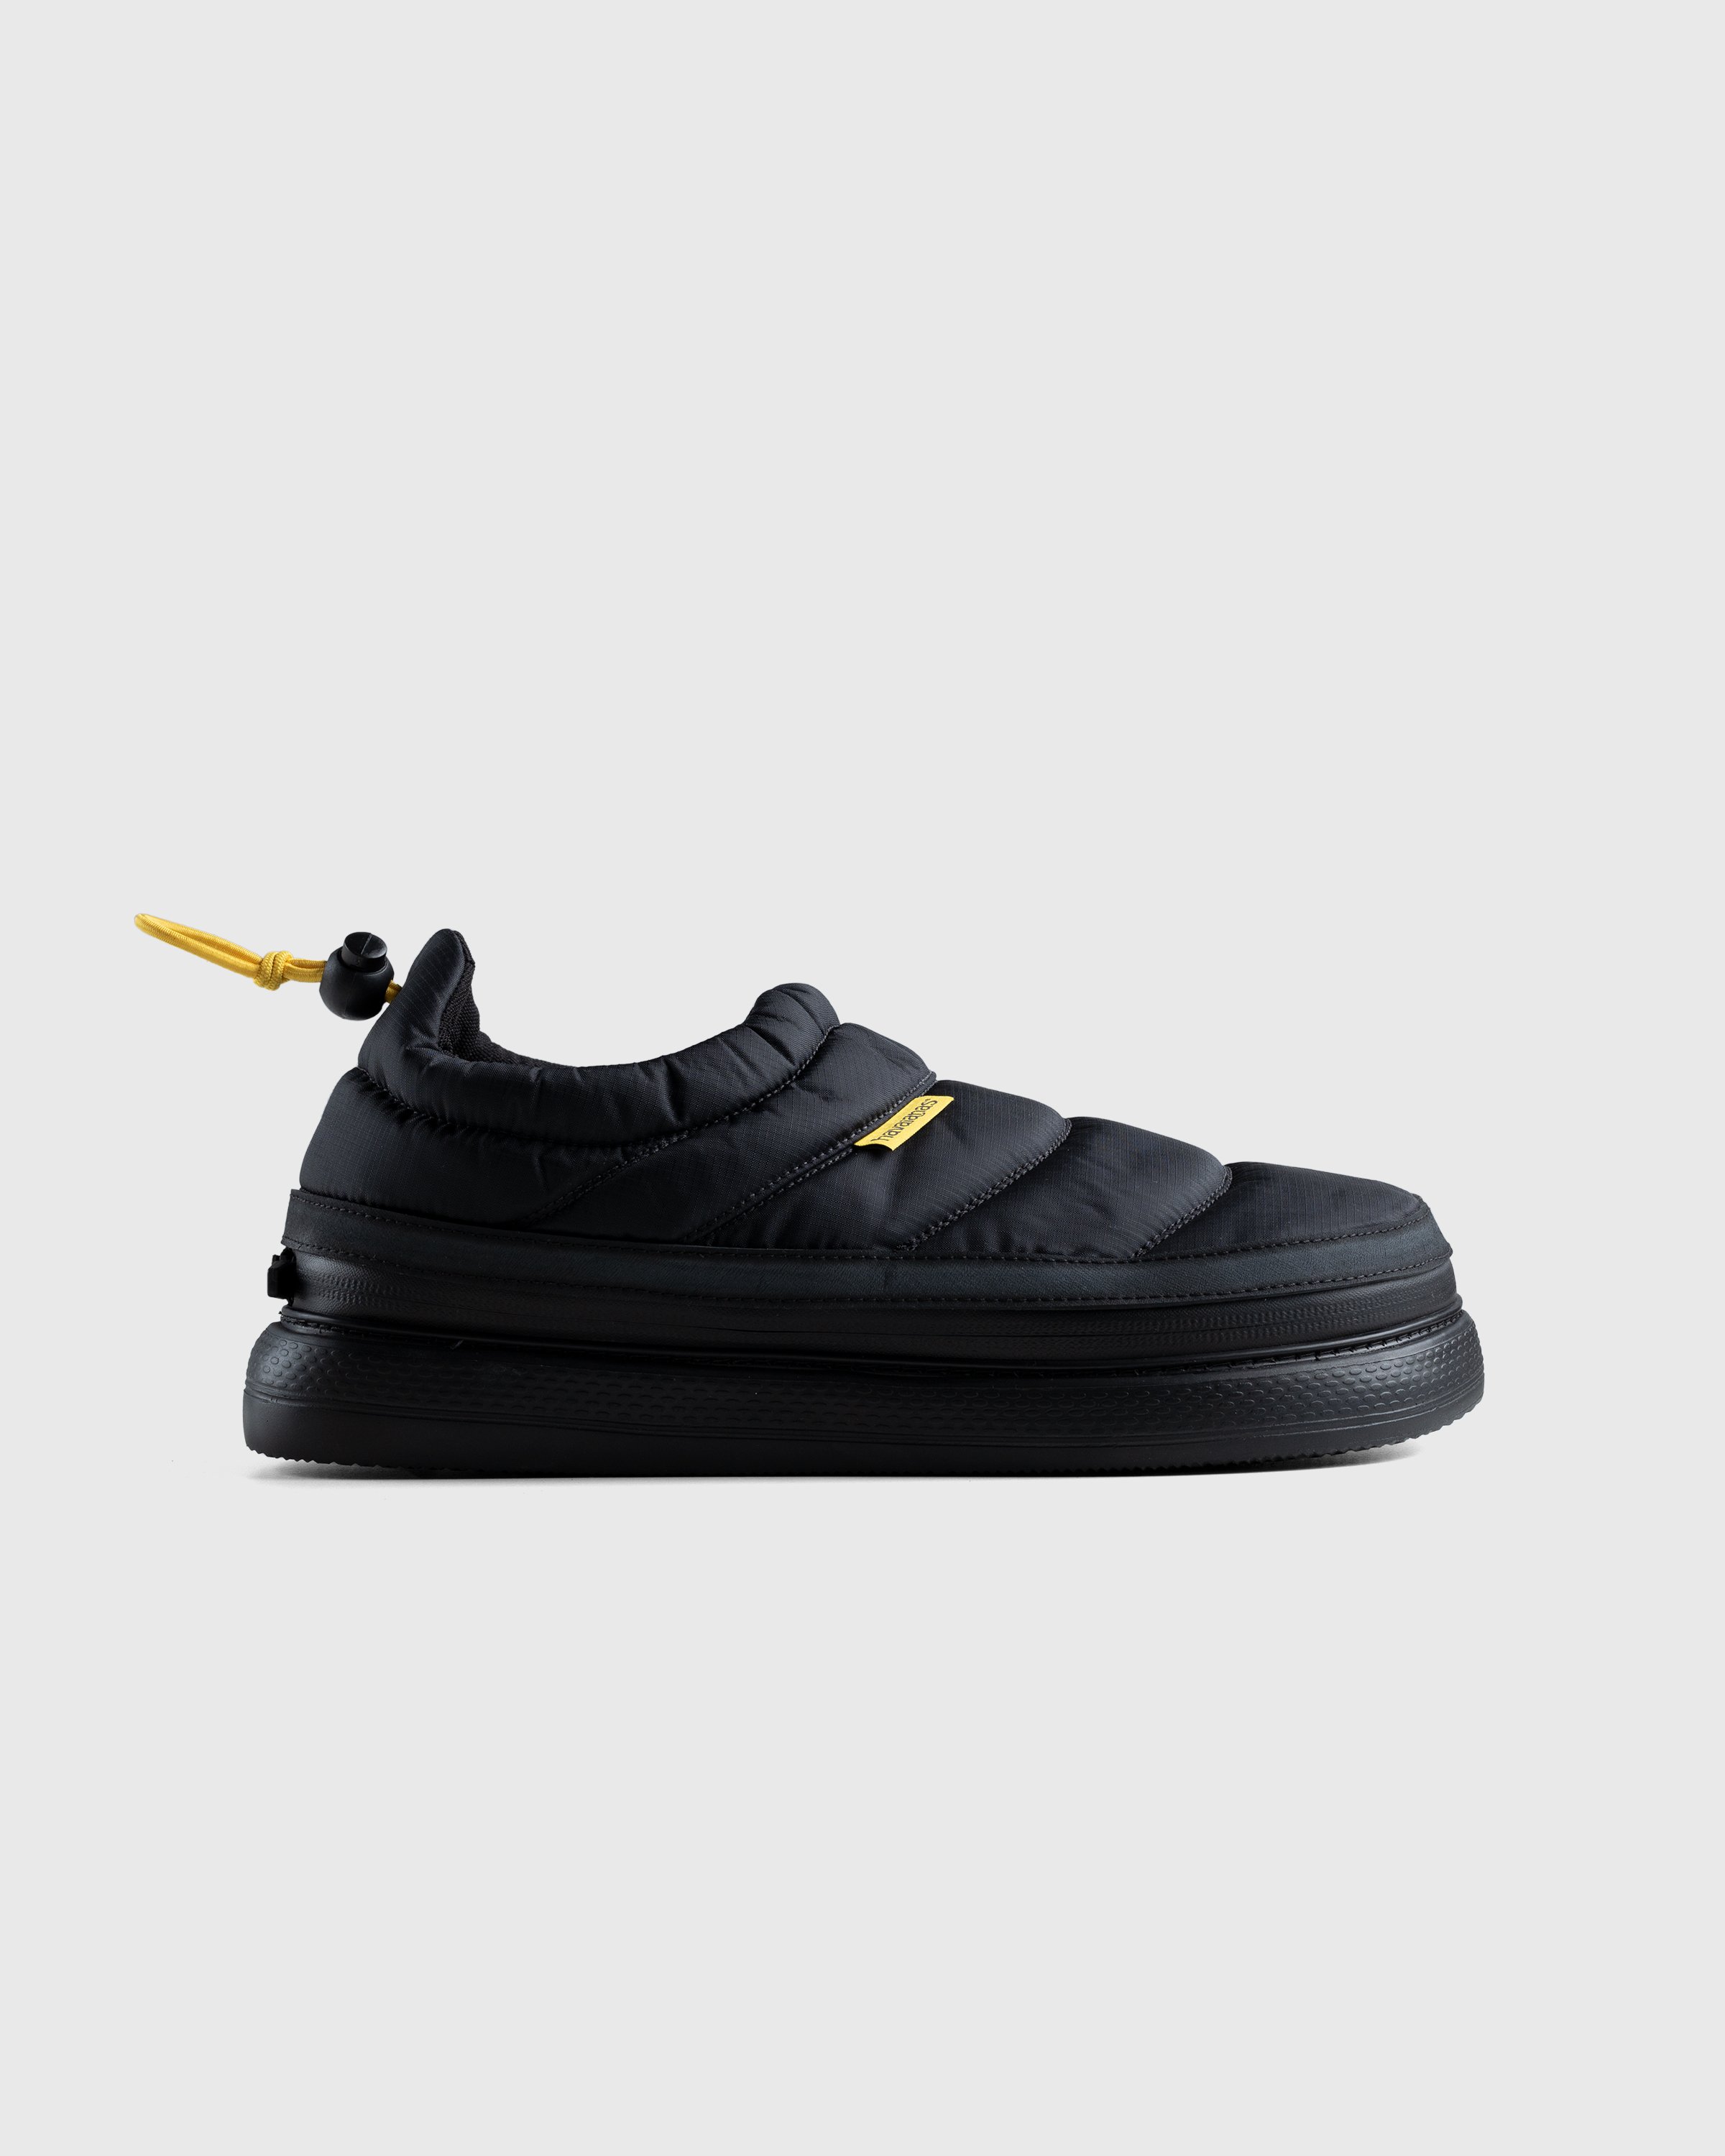 Market - Zip Top Black/Yellow - Footwear - Black - Image 1